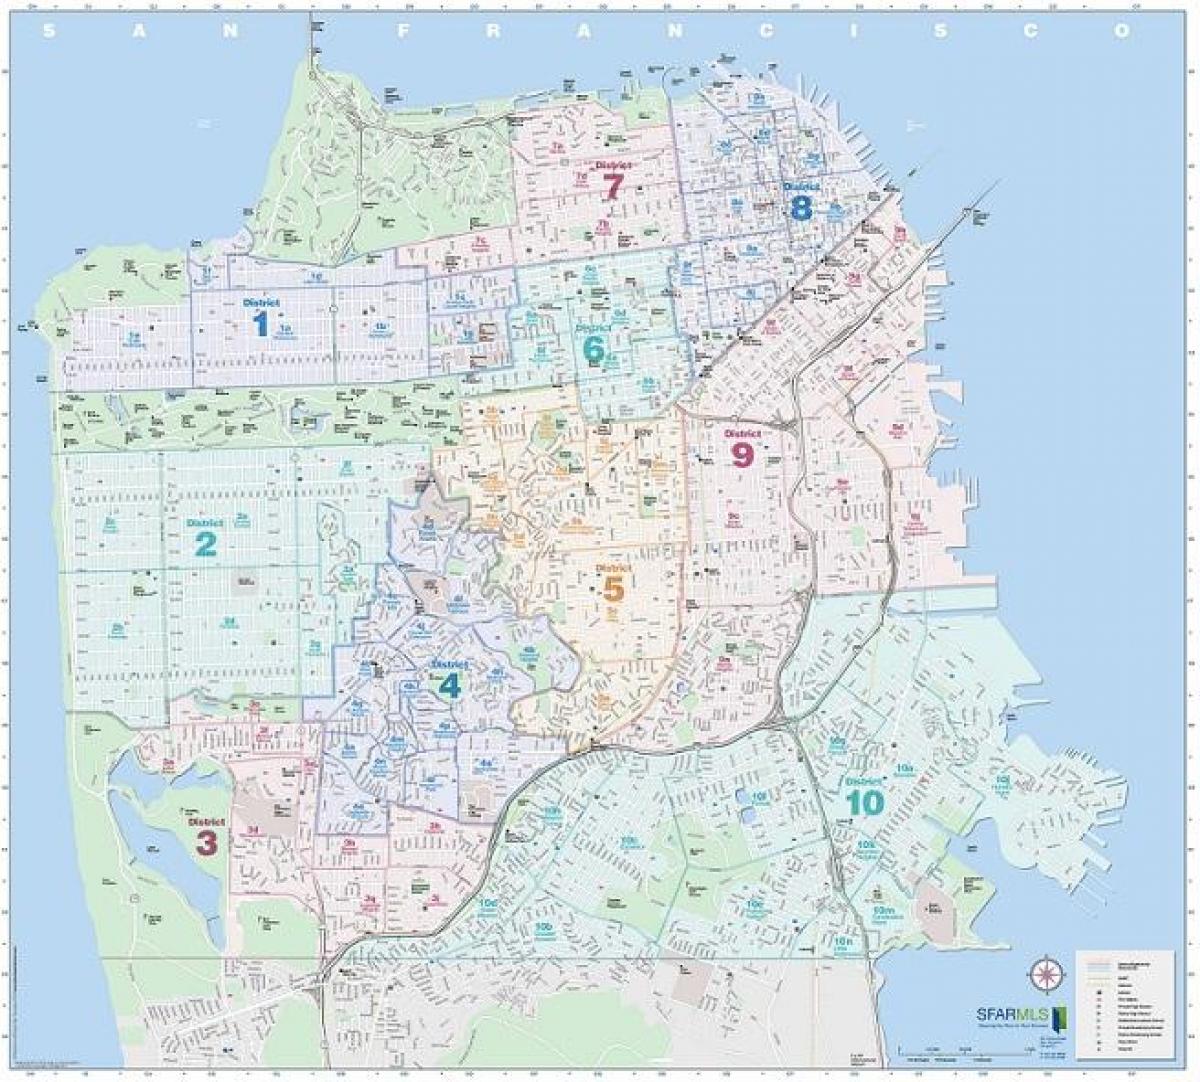 San Francisco mls რუკა